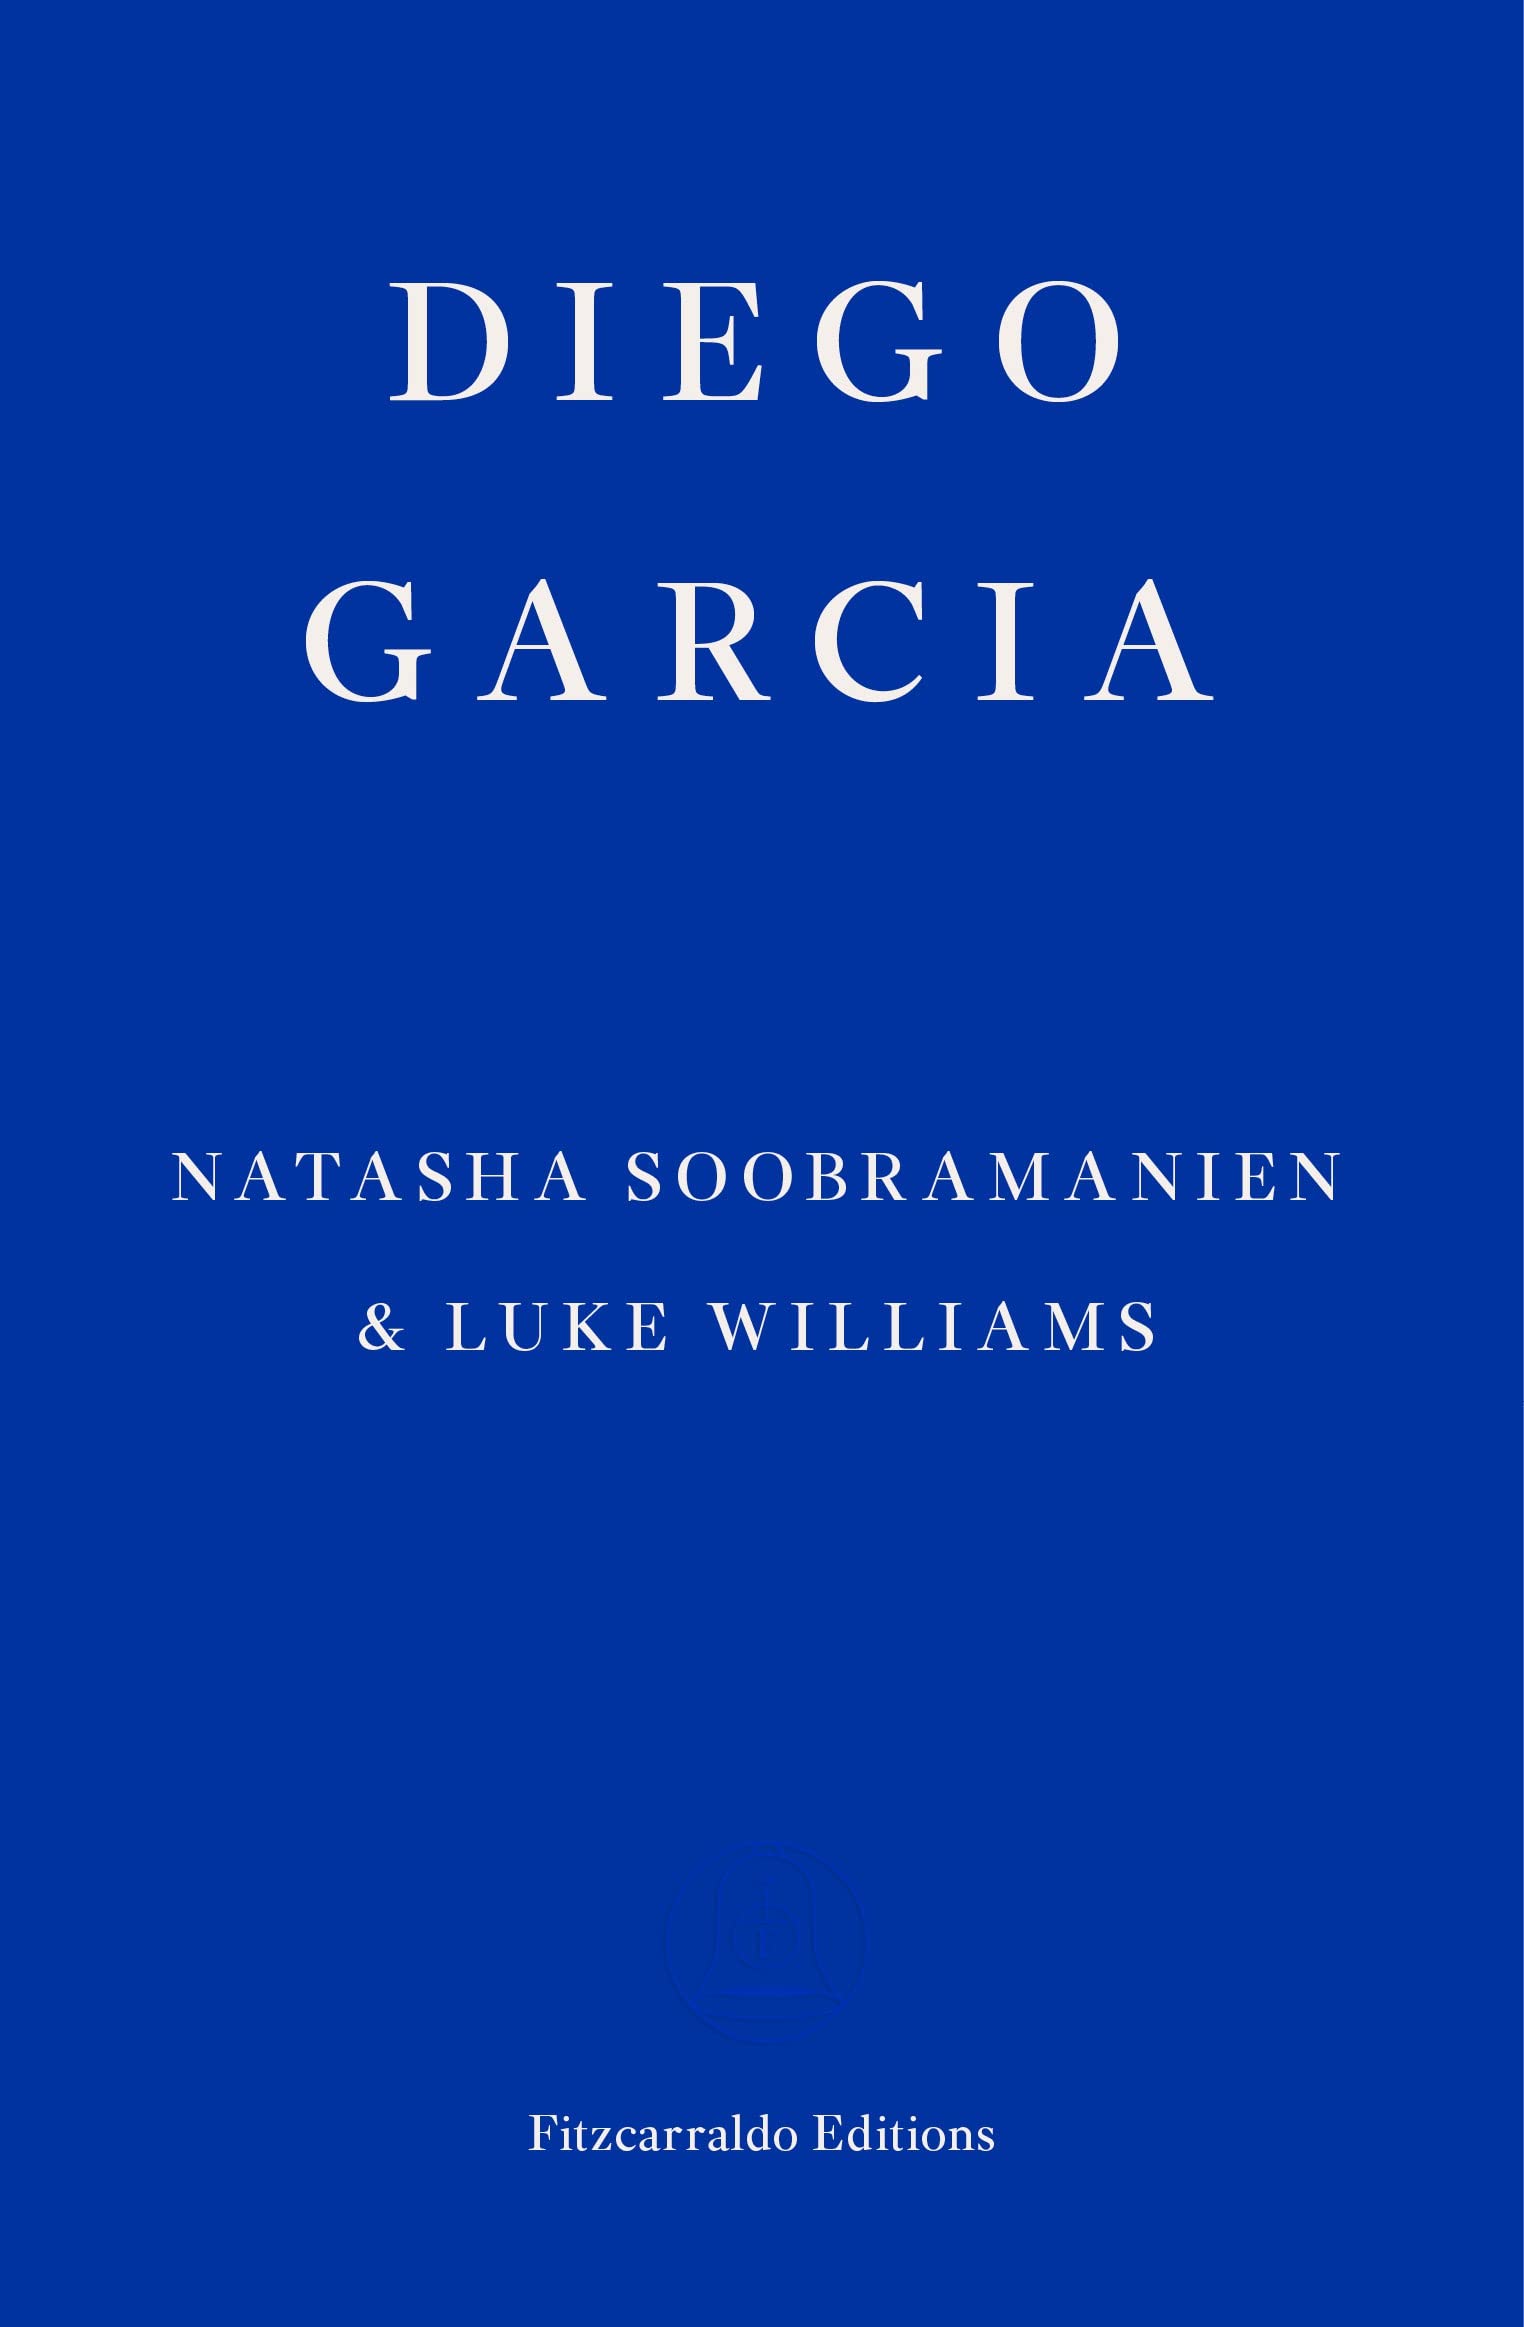 Diego Garcia | Natasha Soobramanien, Luke Williams